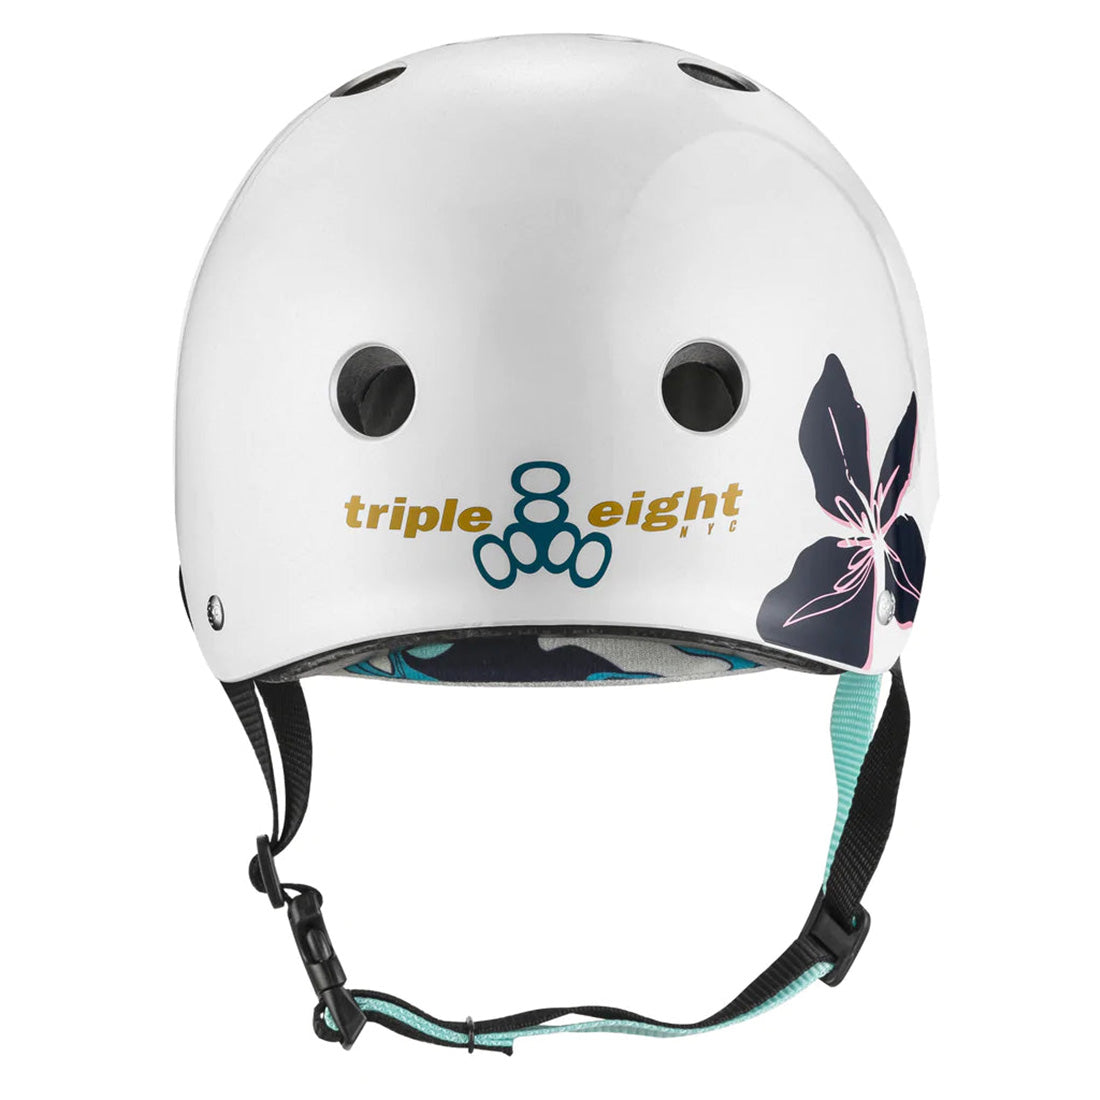 Triple 8 THE Cert SS Helmet - Floral Helmets